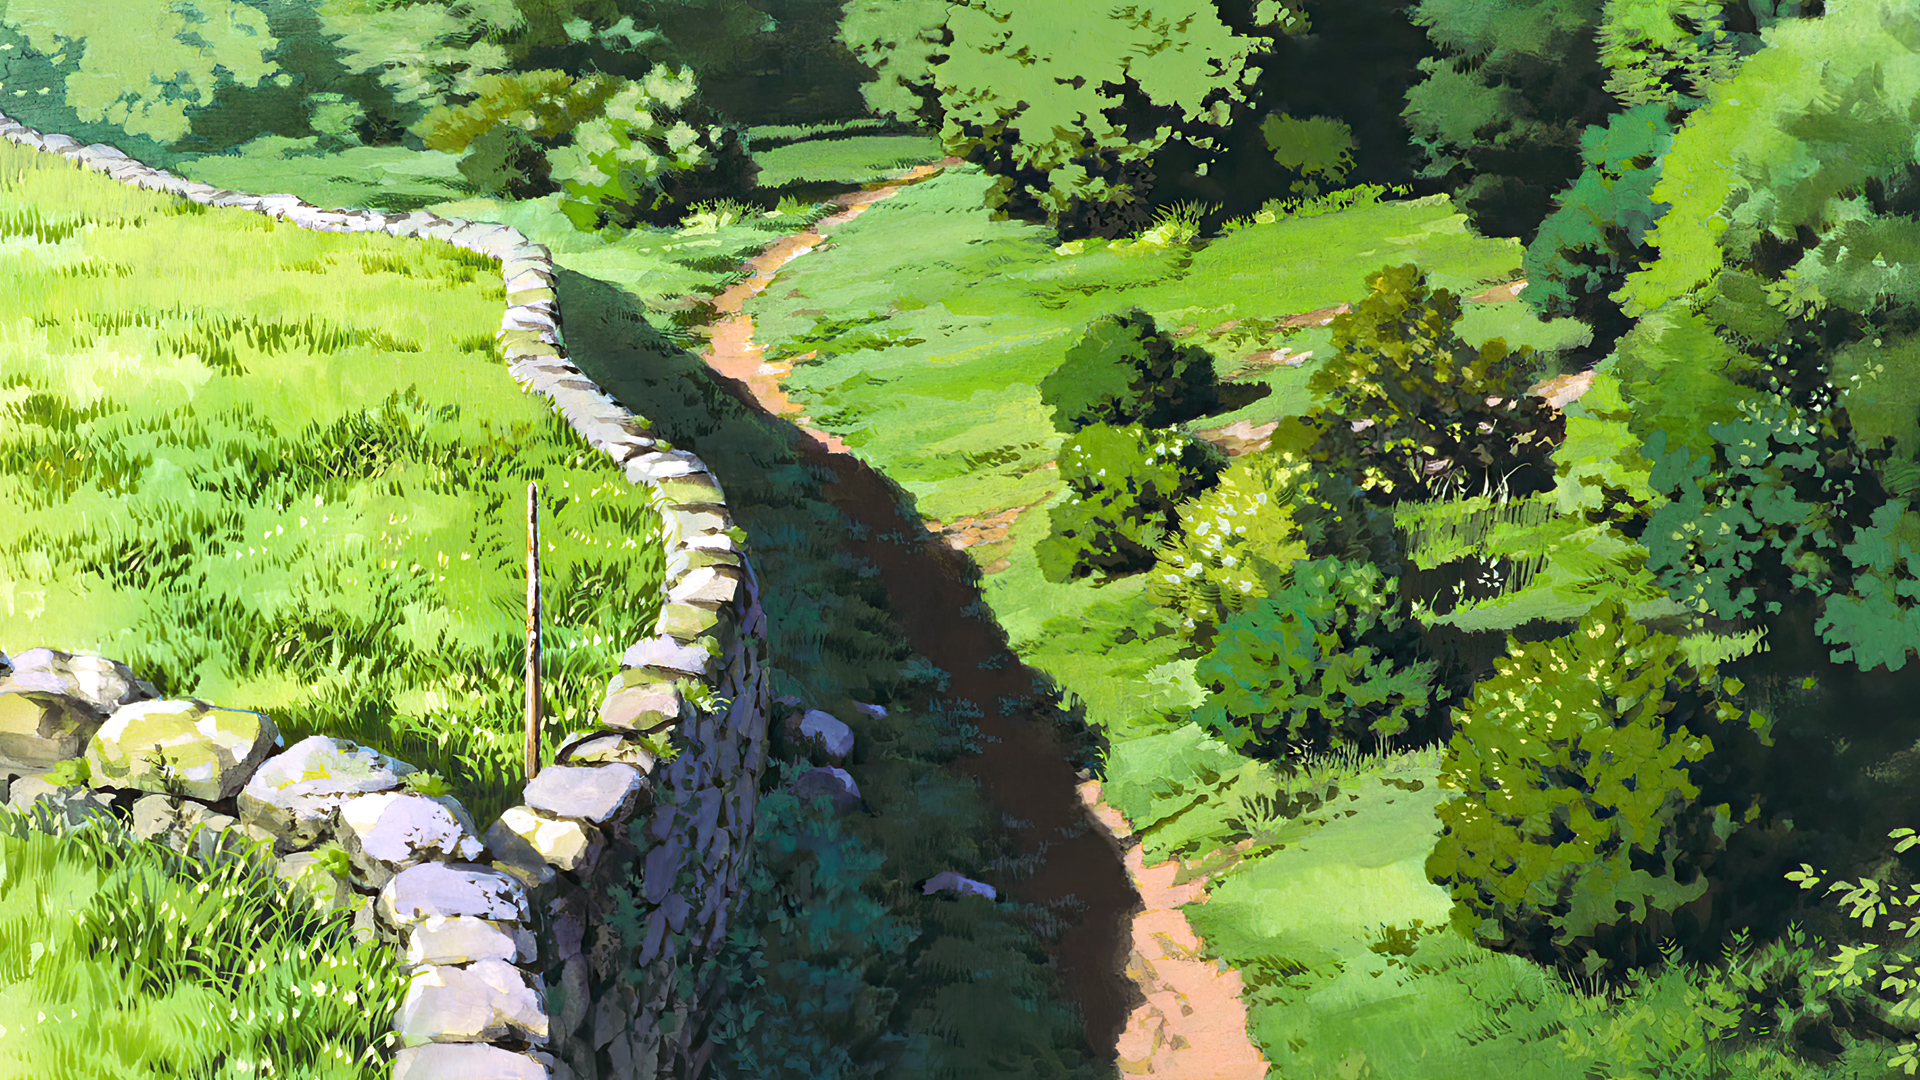 Princess Mononoke Animated Movies Anime Animation Film Stills Studio Ghibli Hayao Miyazaki Stone Fen 1920x1080